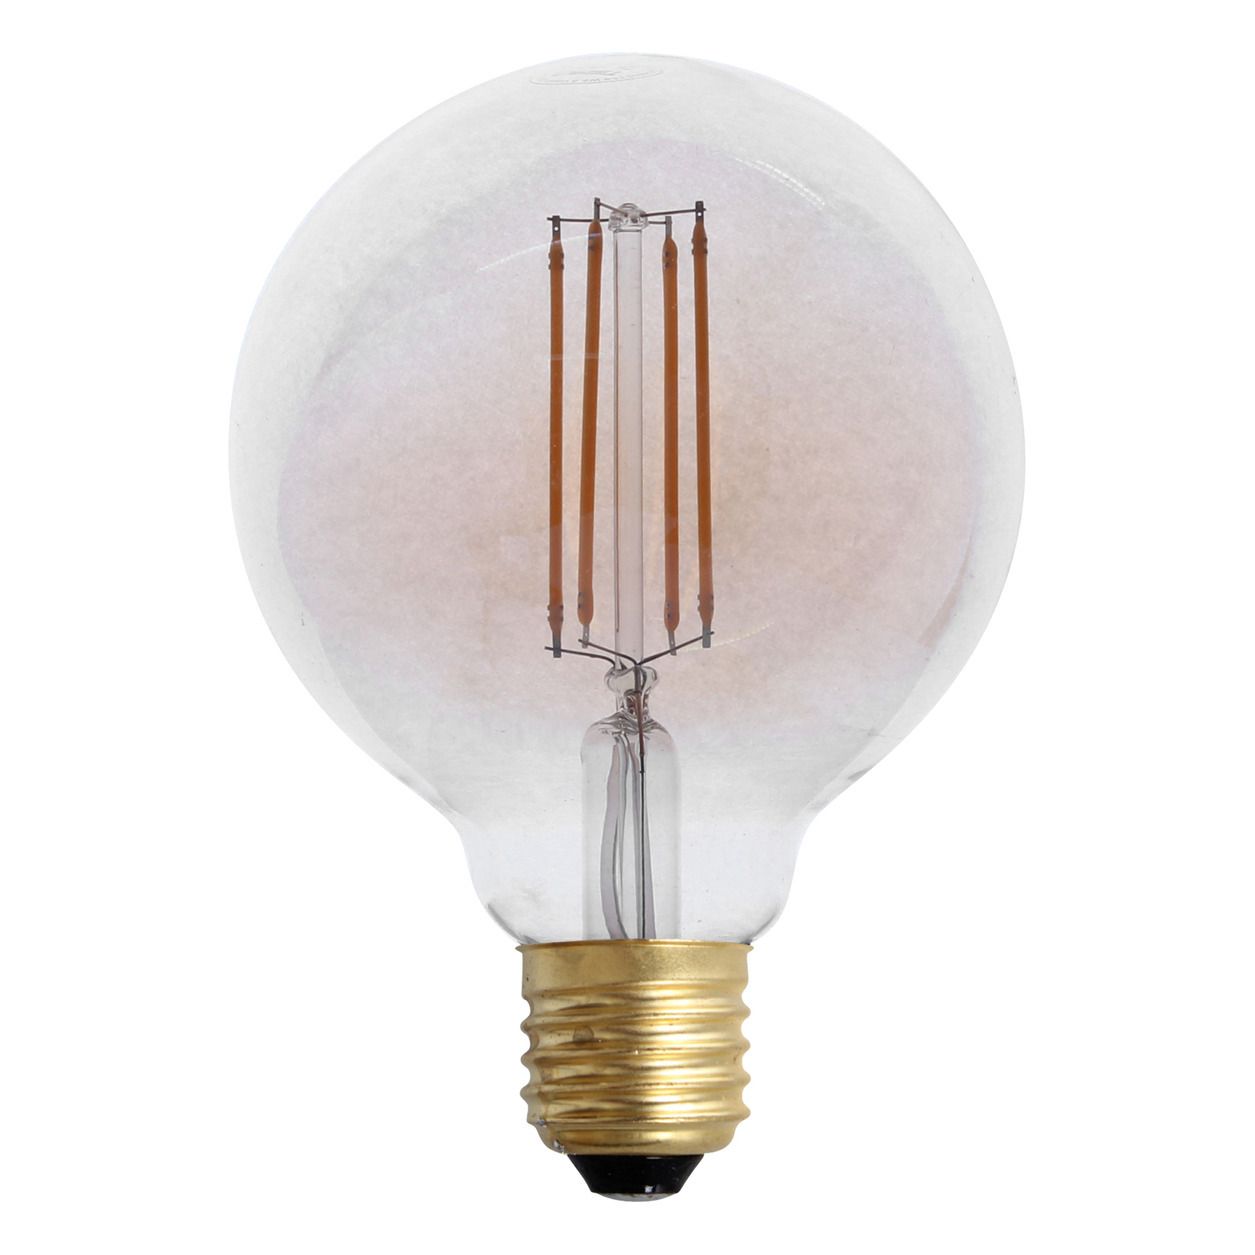 Opjet - Ampoule LED Globe 4w - Ambre